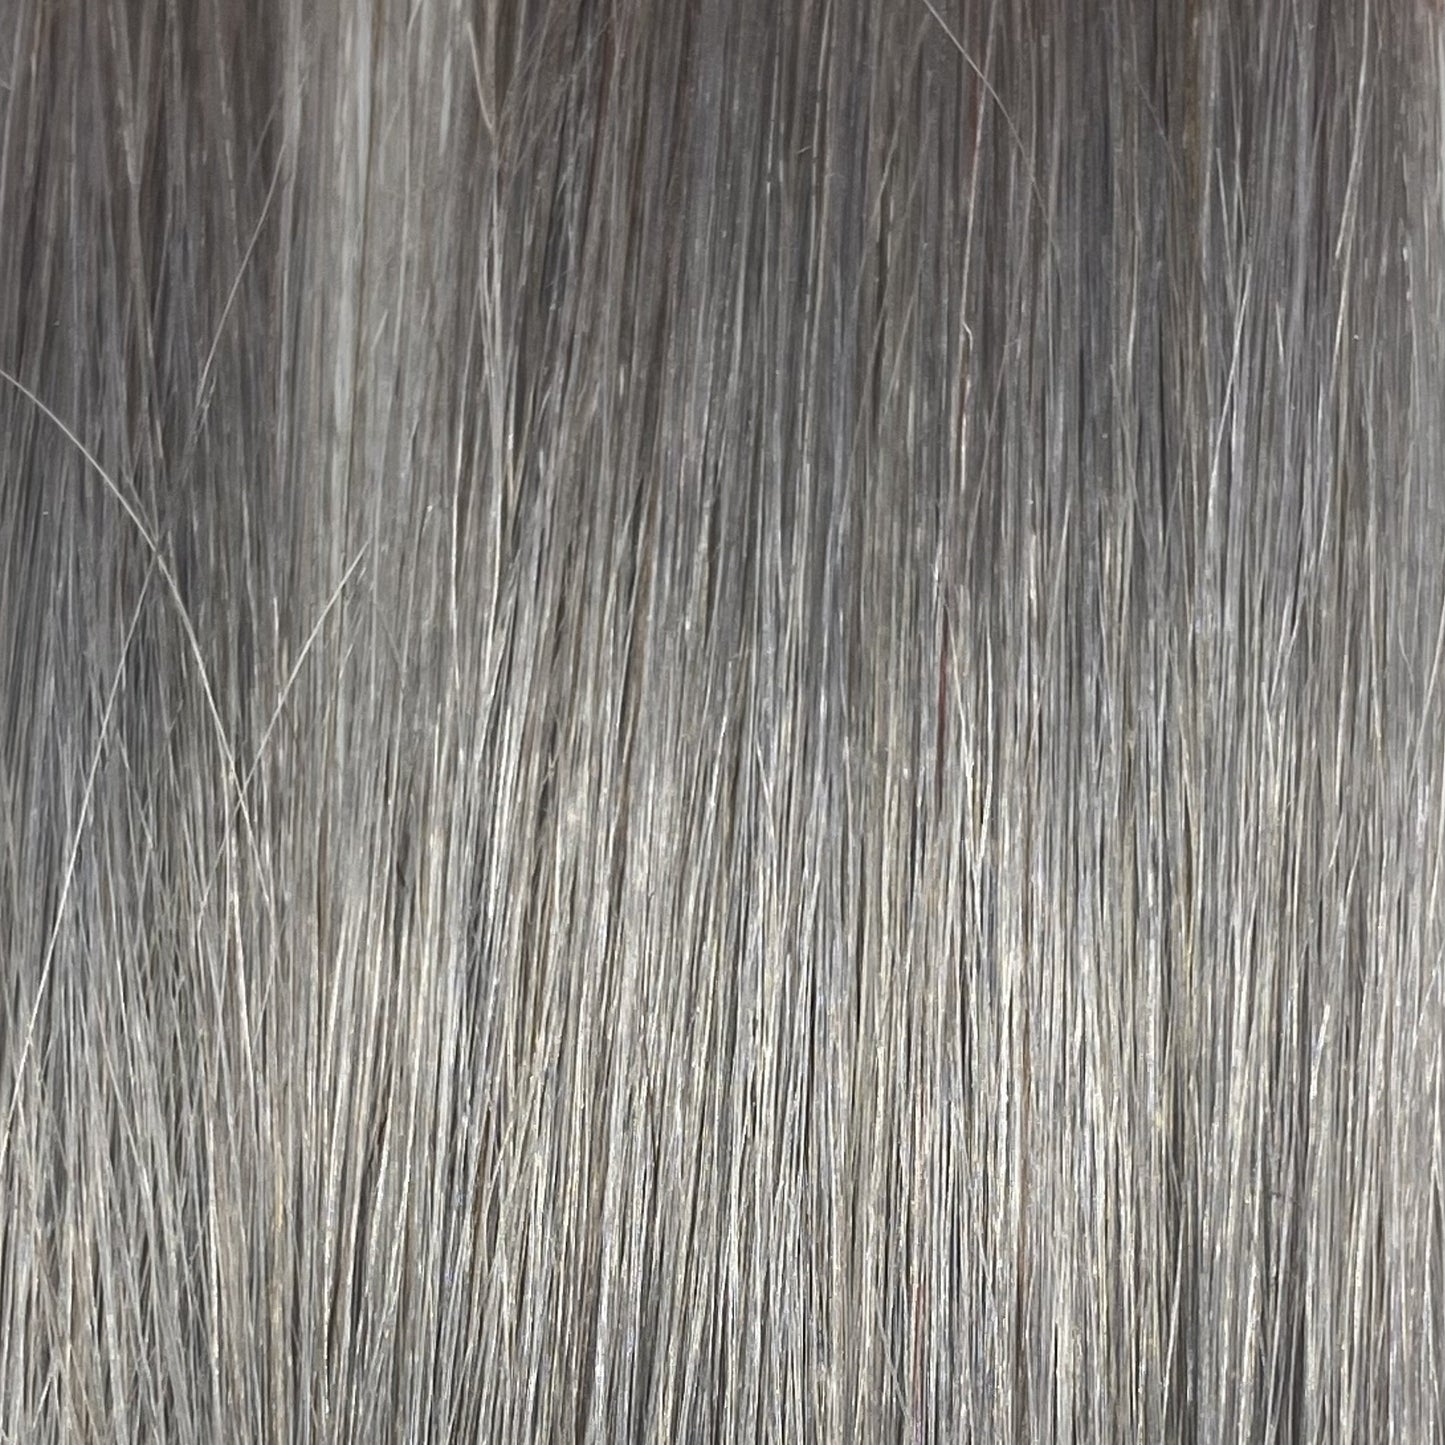 Fusion hair extensions #1006 - 50cm/20 inches - Silver Fusion Euro So Cap 